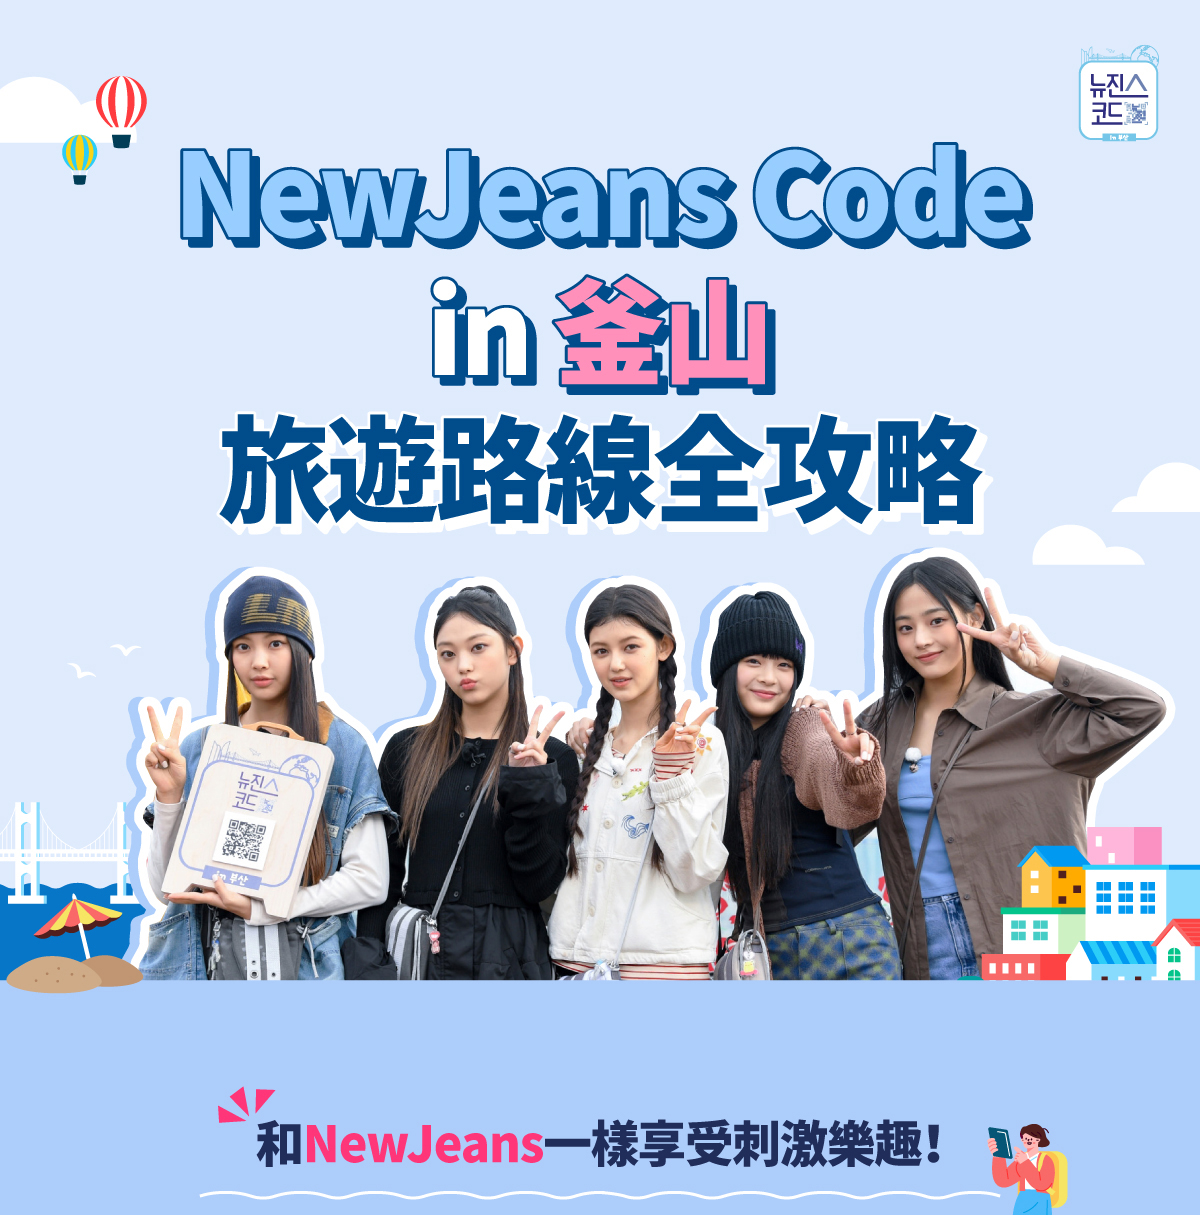 NewJeans Code in 釜山旅遊路線全攻略, 和NewJeans一樣享受刺激樂趣!